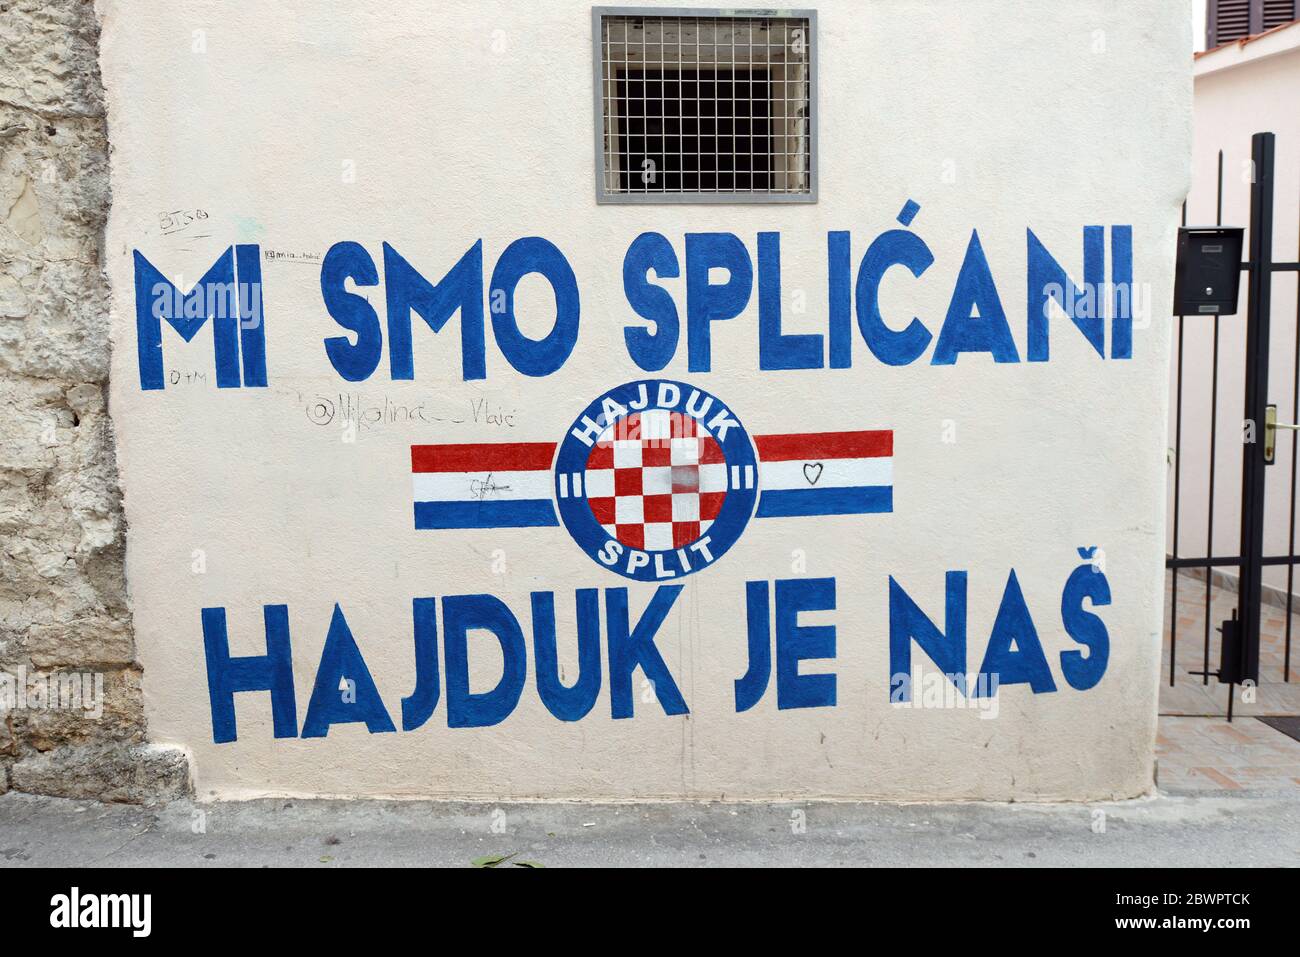 File:Split - Building with paint of Hajduk Split.jpg - Wikimedia